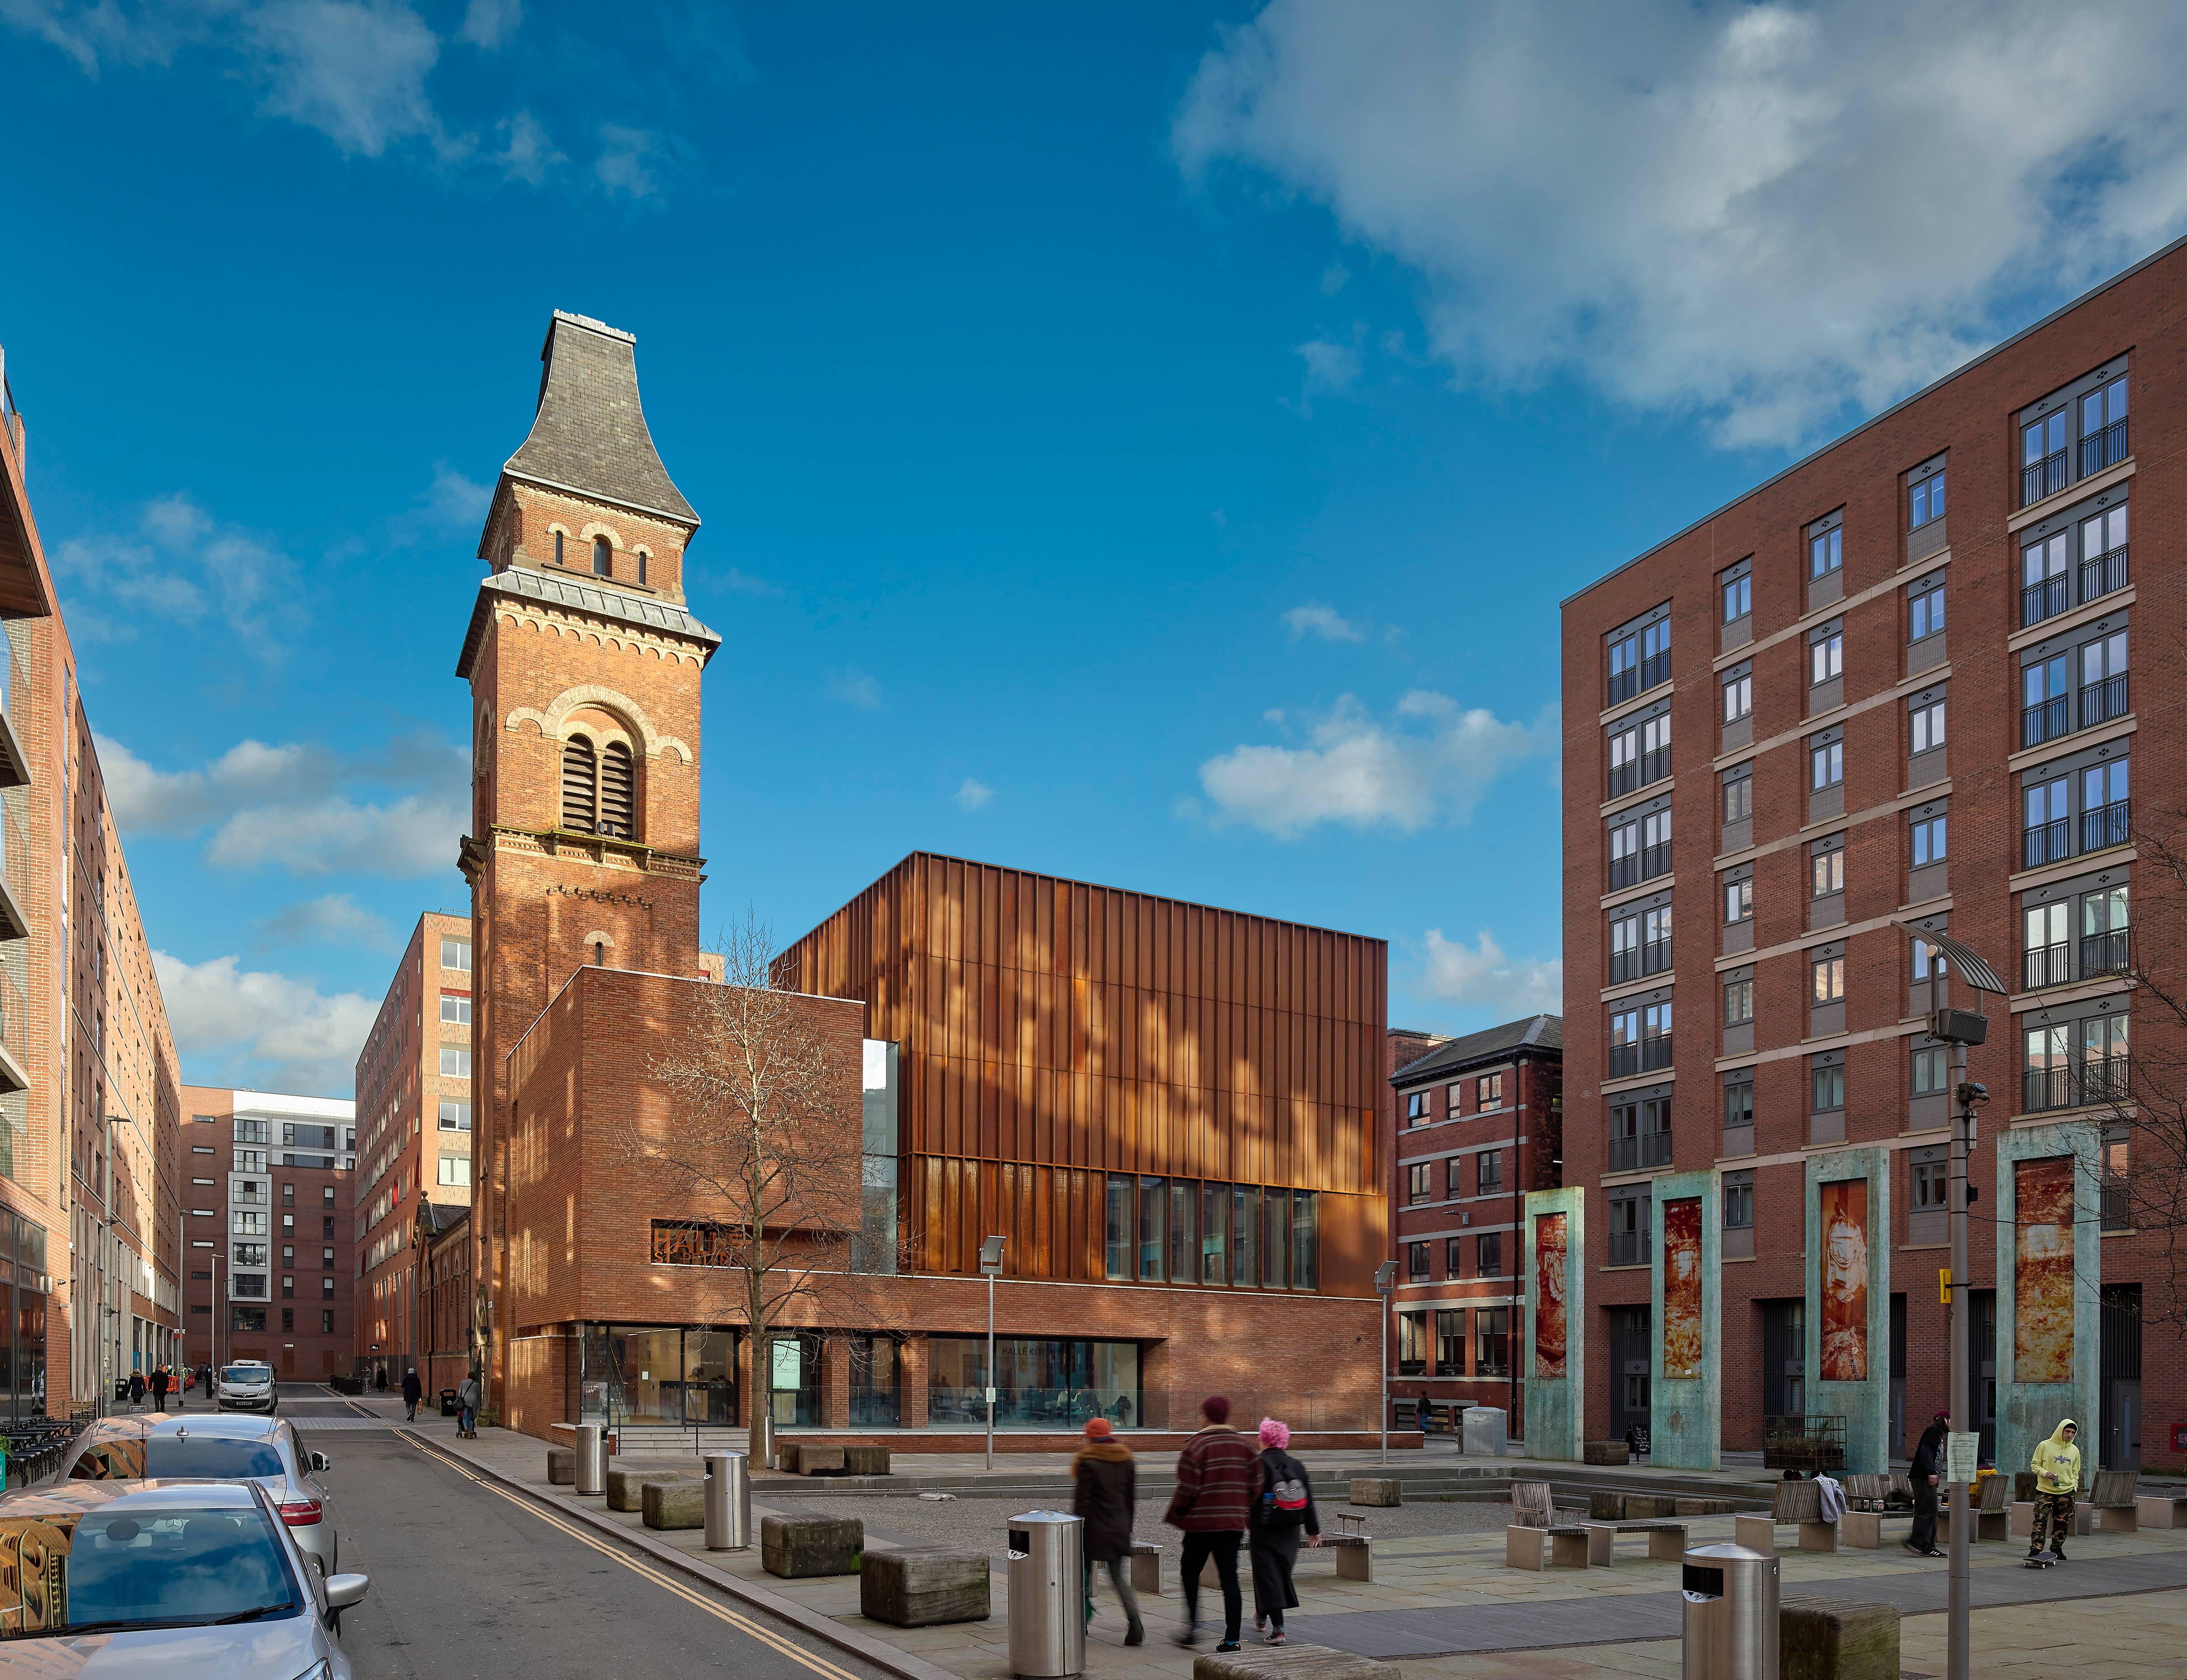 The Oglesby Centre at Hallé St Peter's (Manchester) by stephenson hamilton risley STUDIO. Photo: Daniel Hopkinson